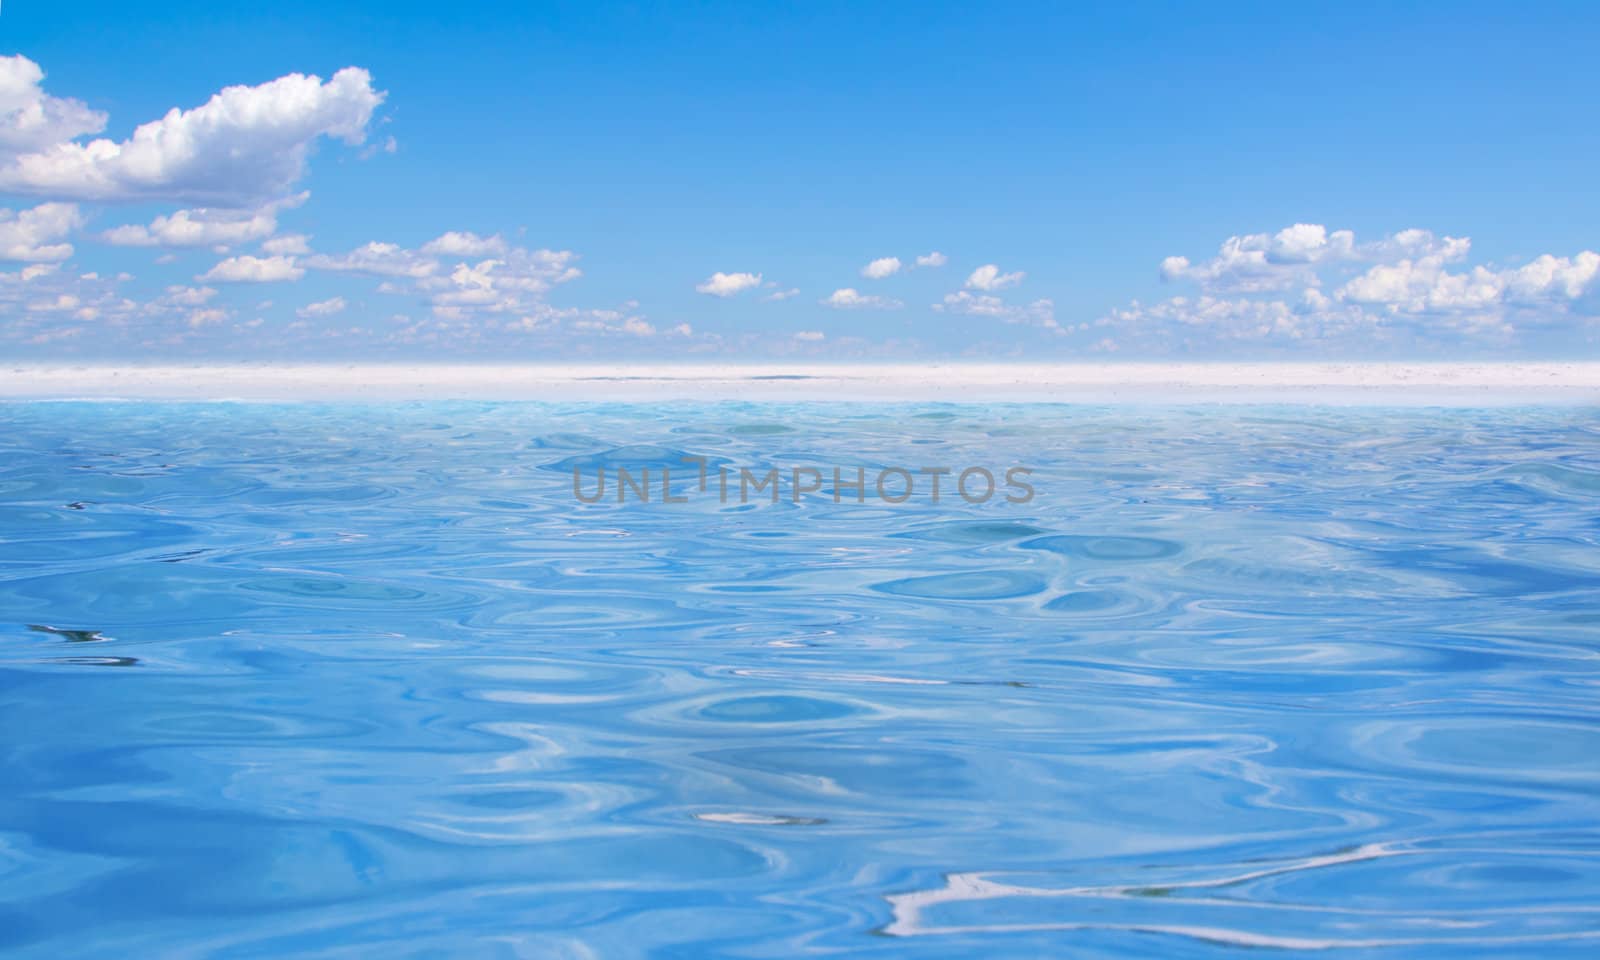 beautiful blue water and sky  by Lexxizm